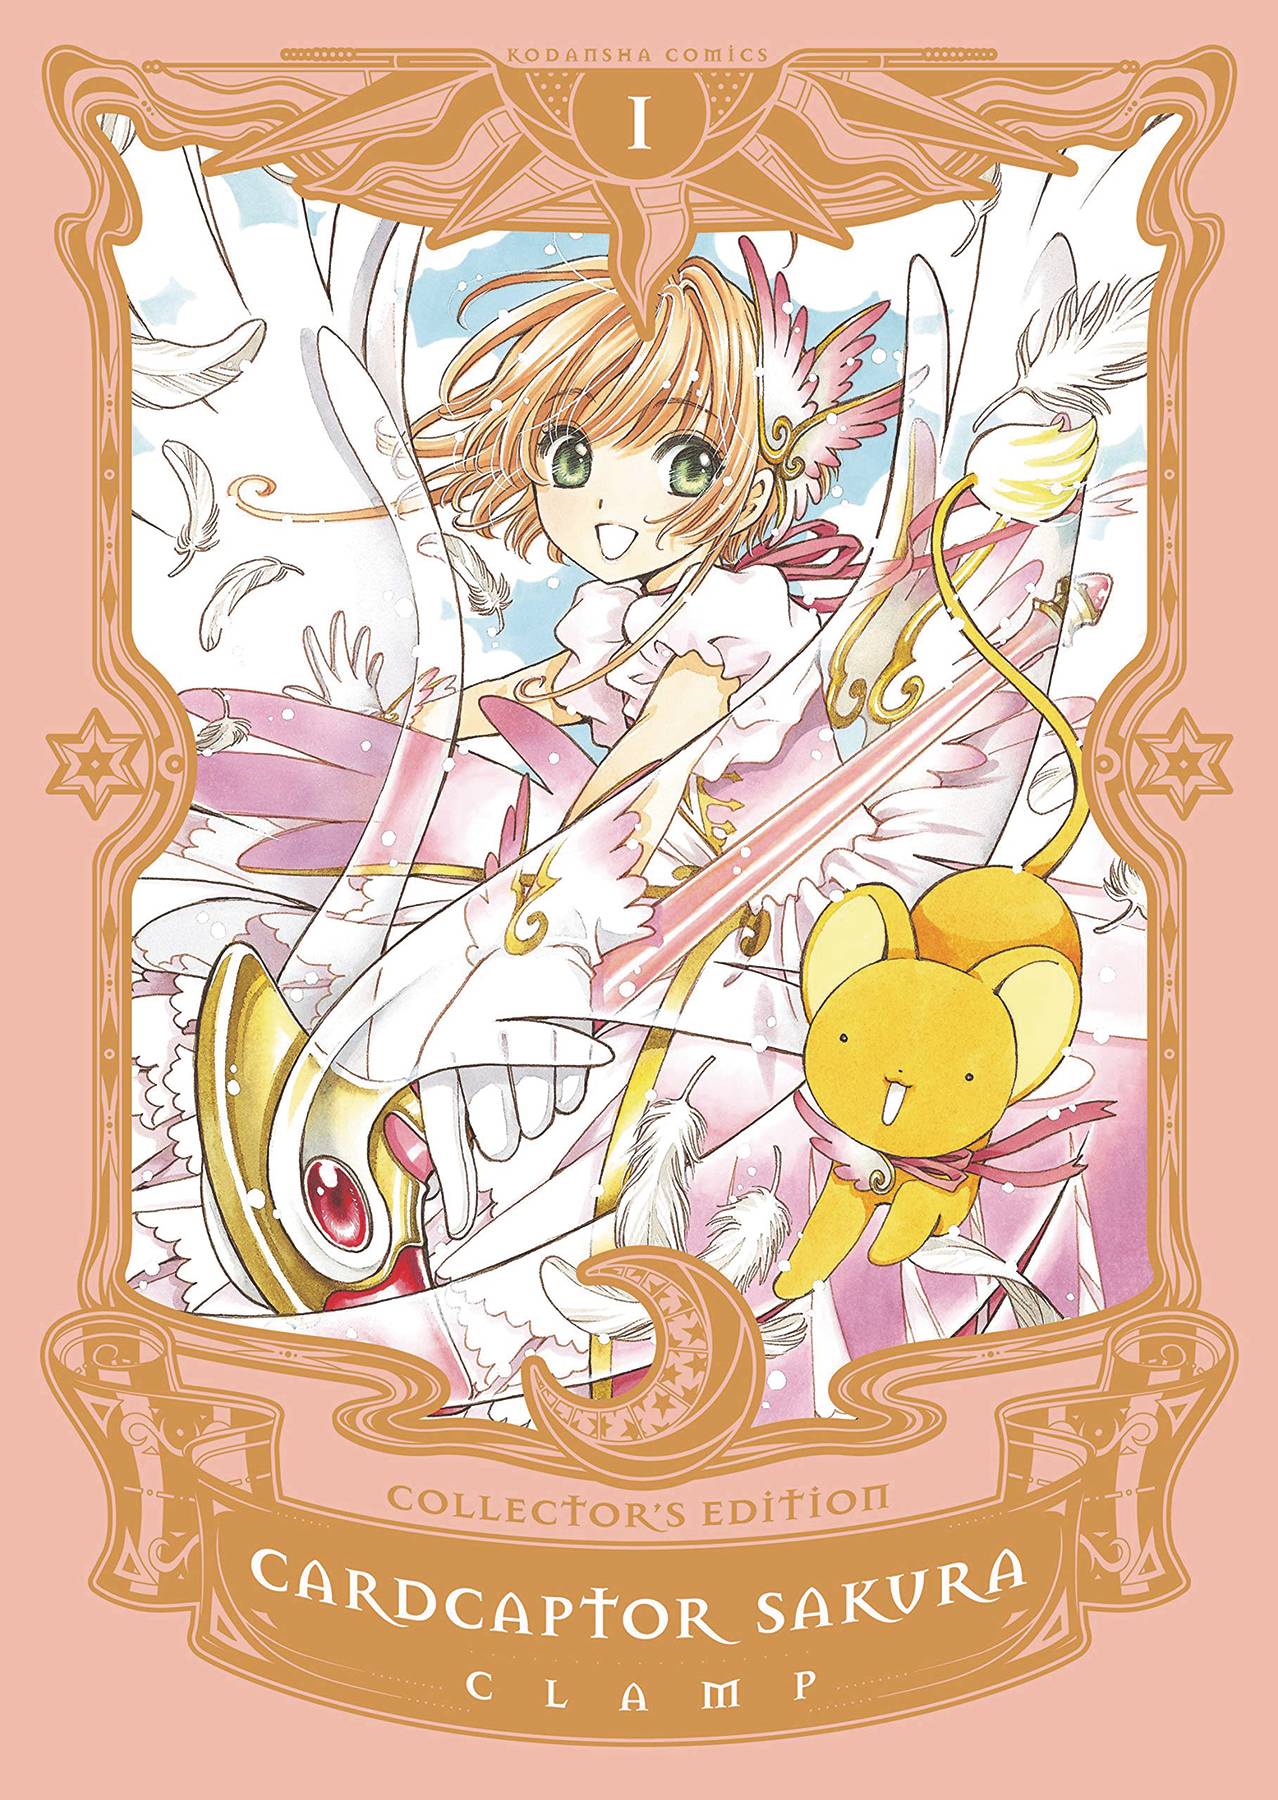 Cardcaptor Sakura Collected Edition Hardcover Volume 1 (Of 9)